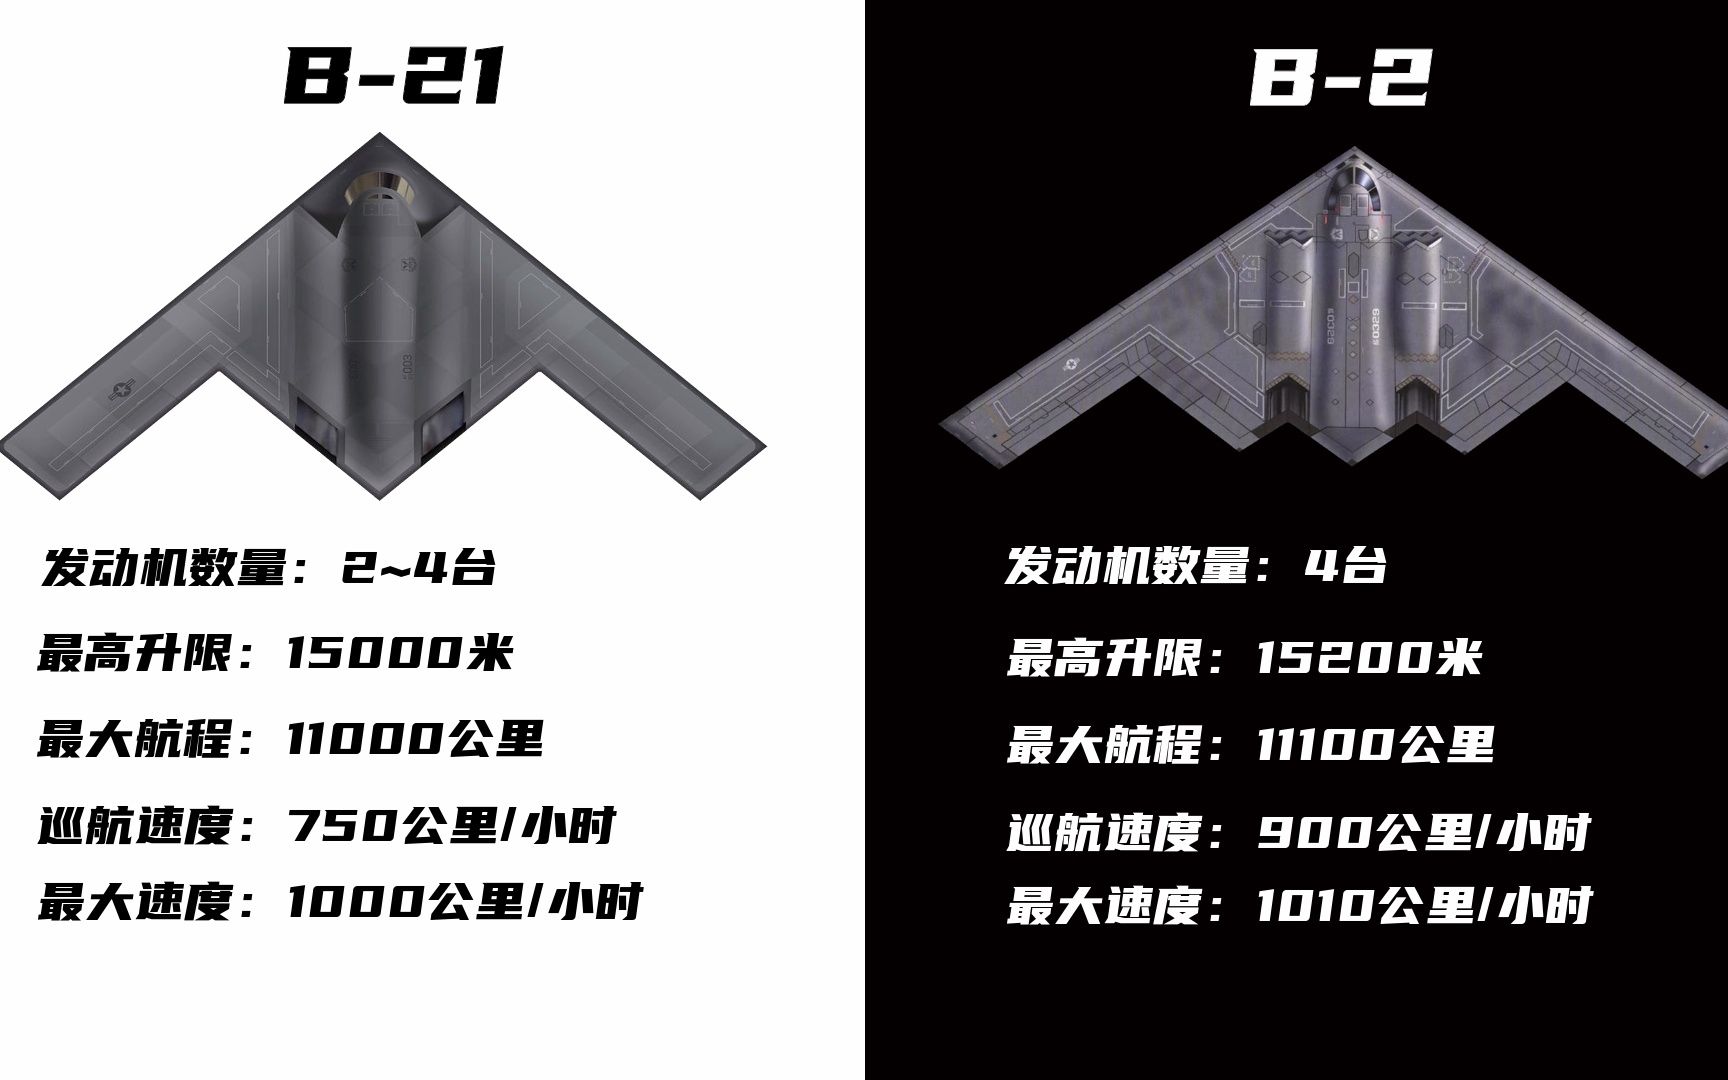 B21和B2隐形轰炸机数据对比